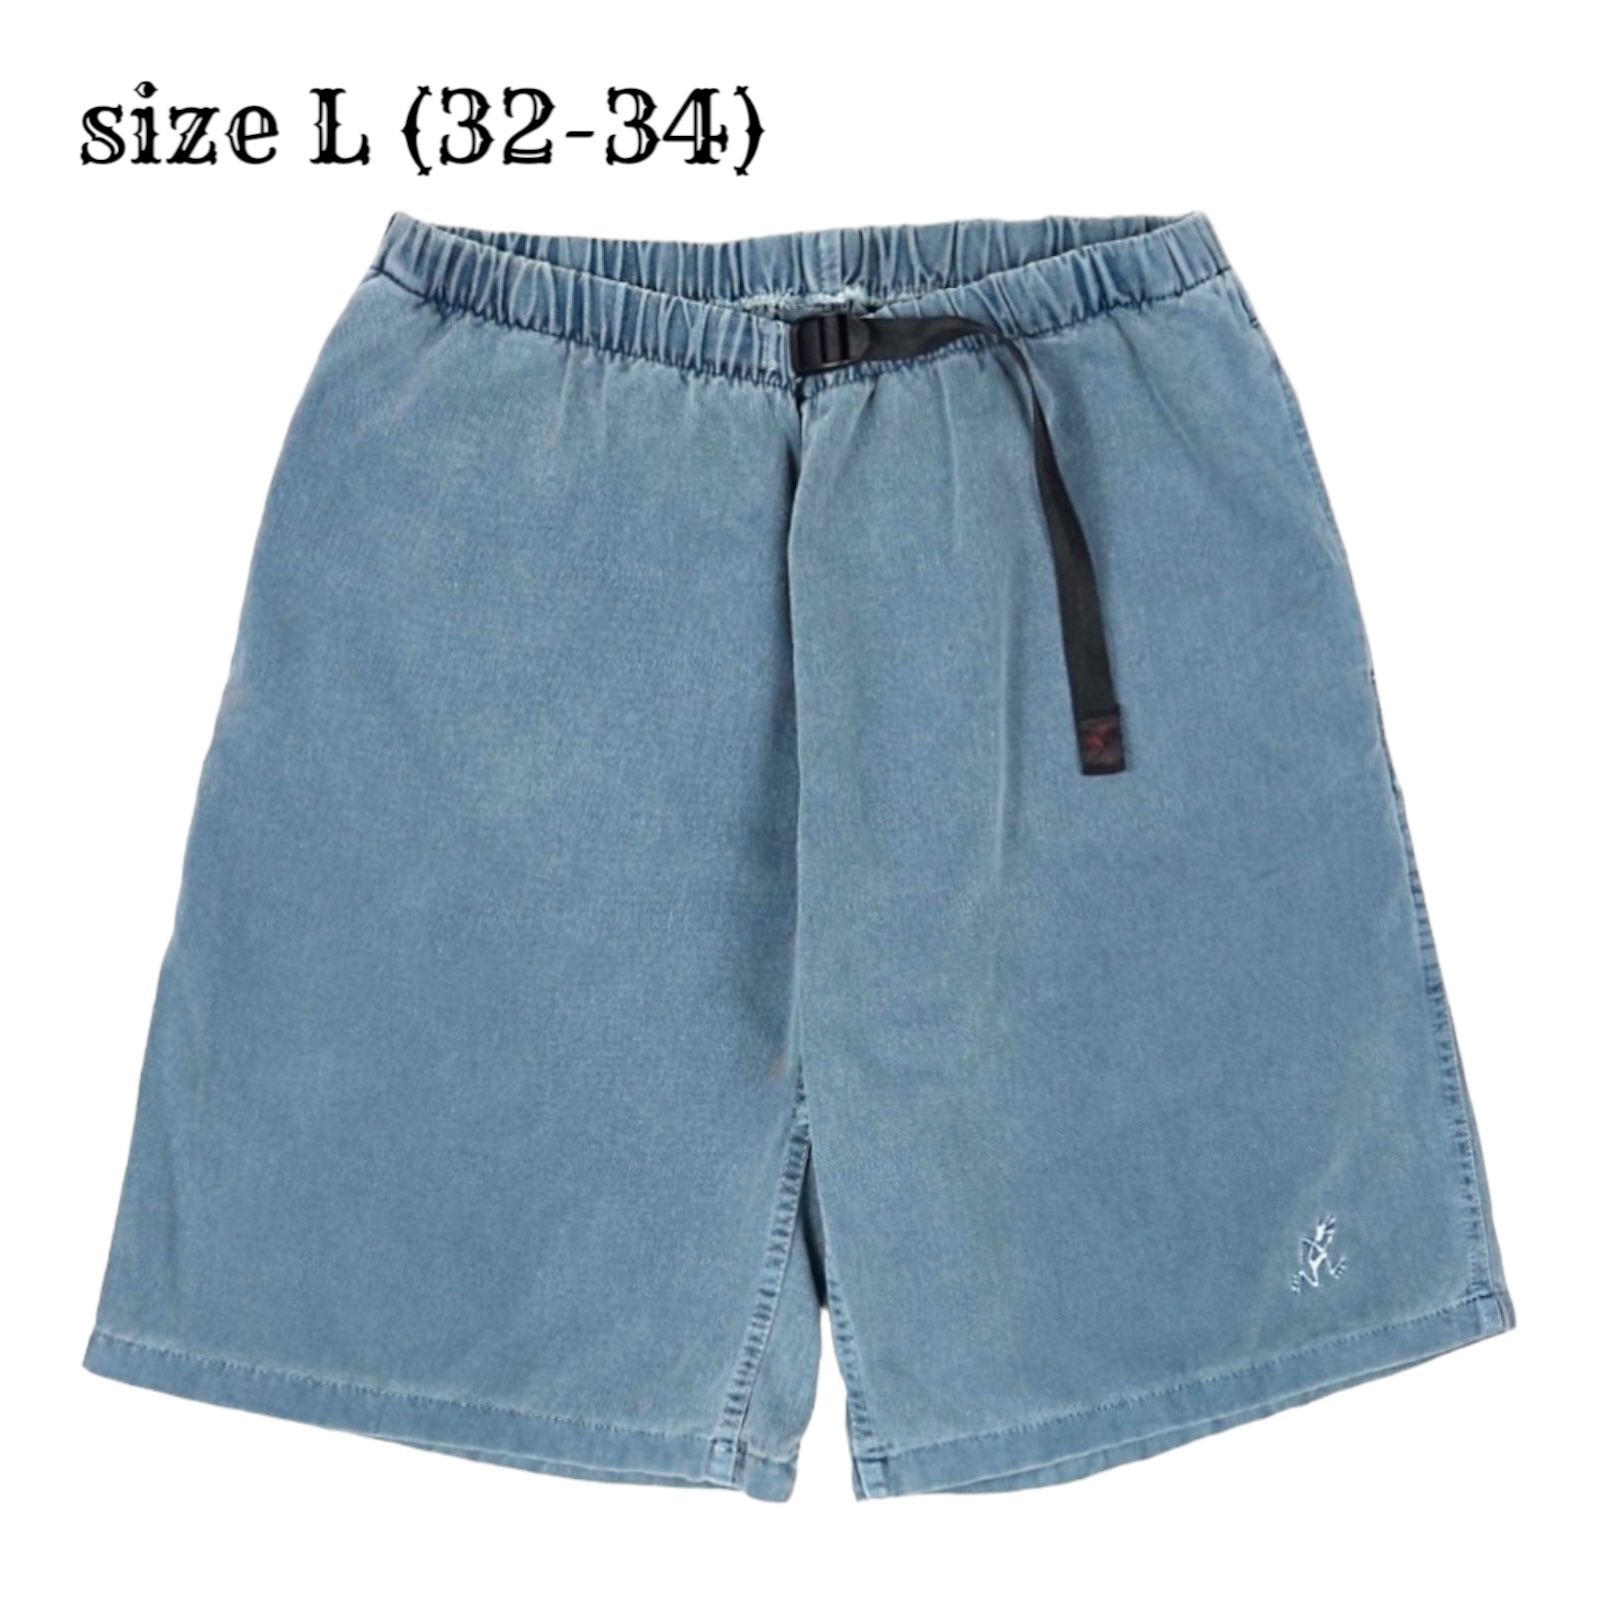 Vintage Gramicci Outdoor Shorts Size L